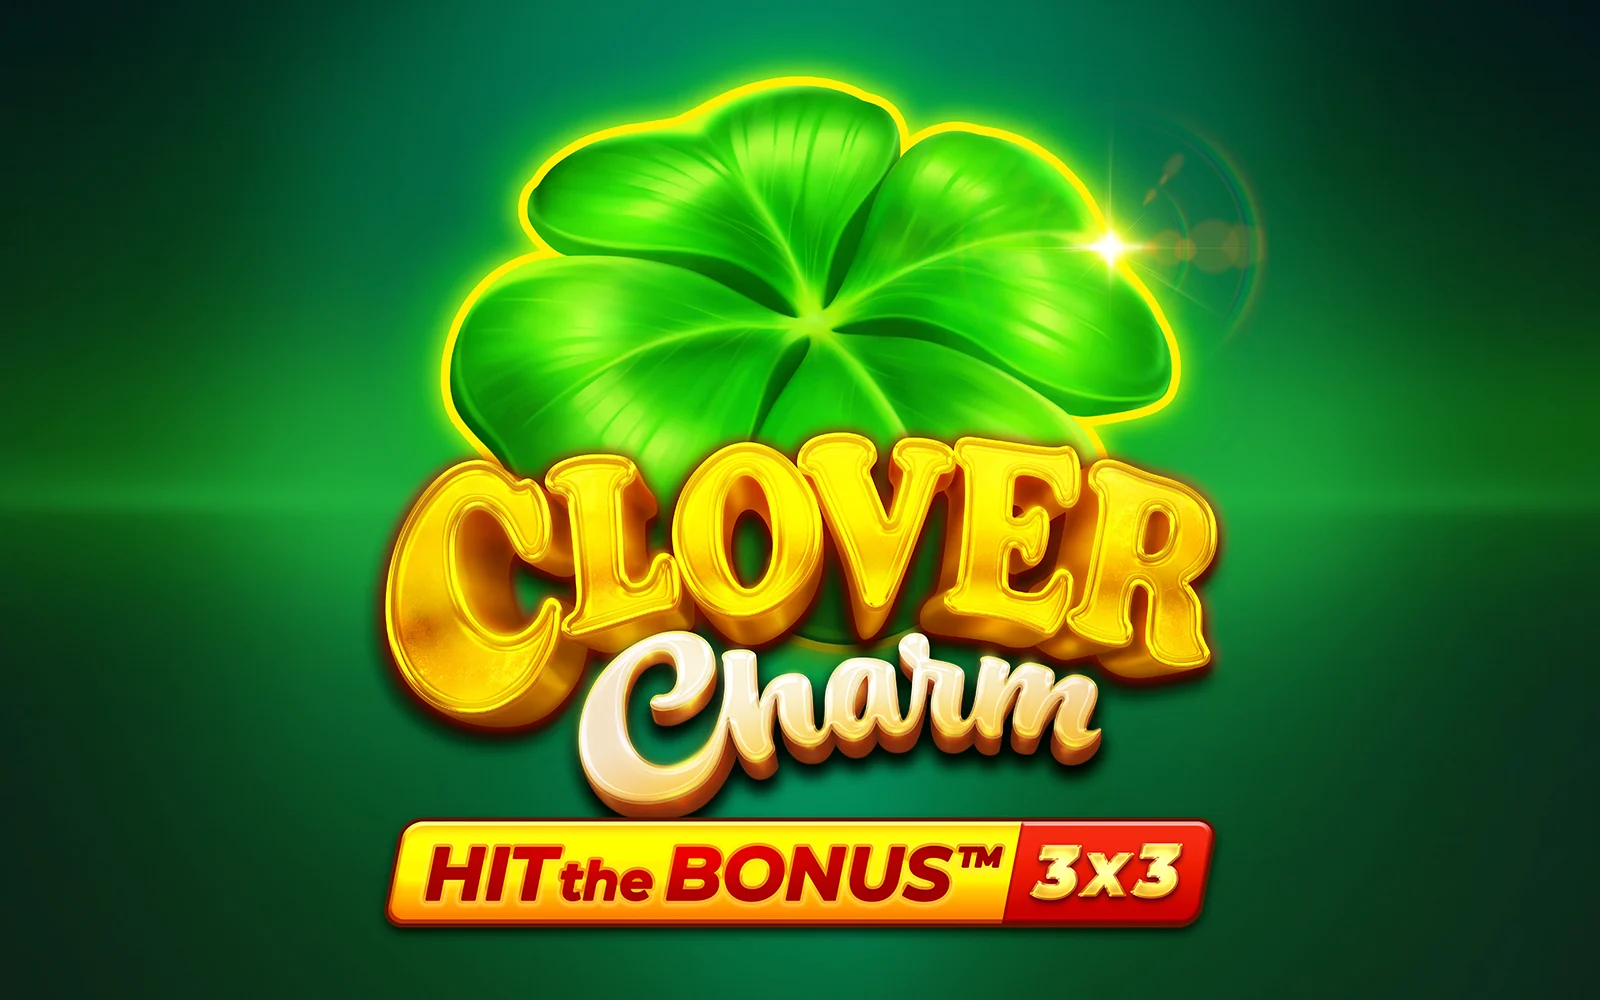 Juega a Clover Charm: Hit the Bonus ™ en el casino en línea de Starcasino.be